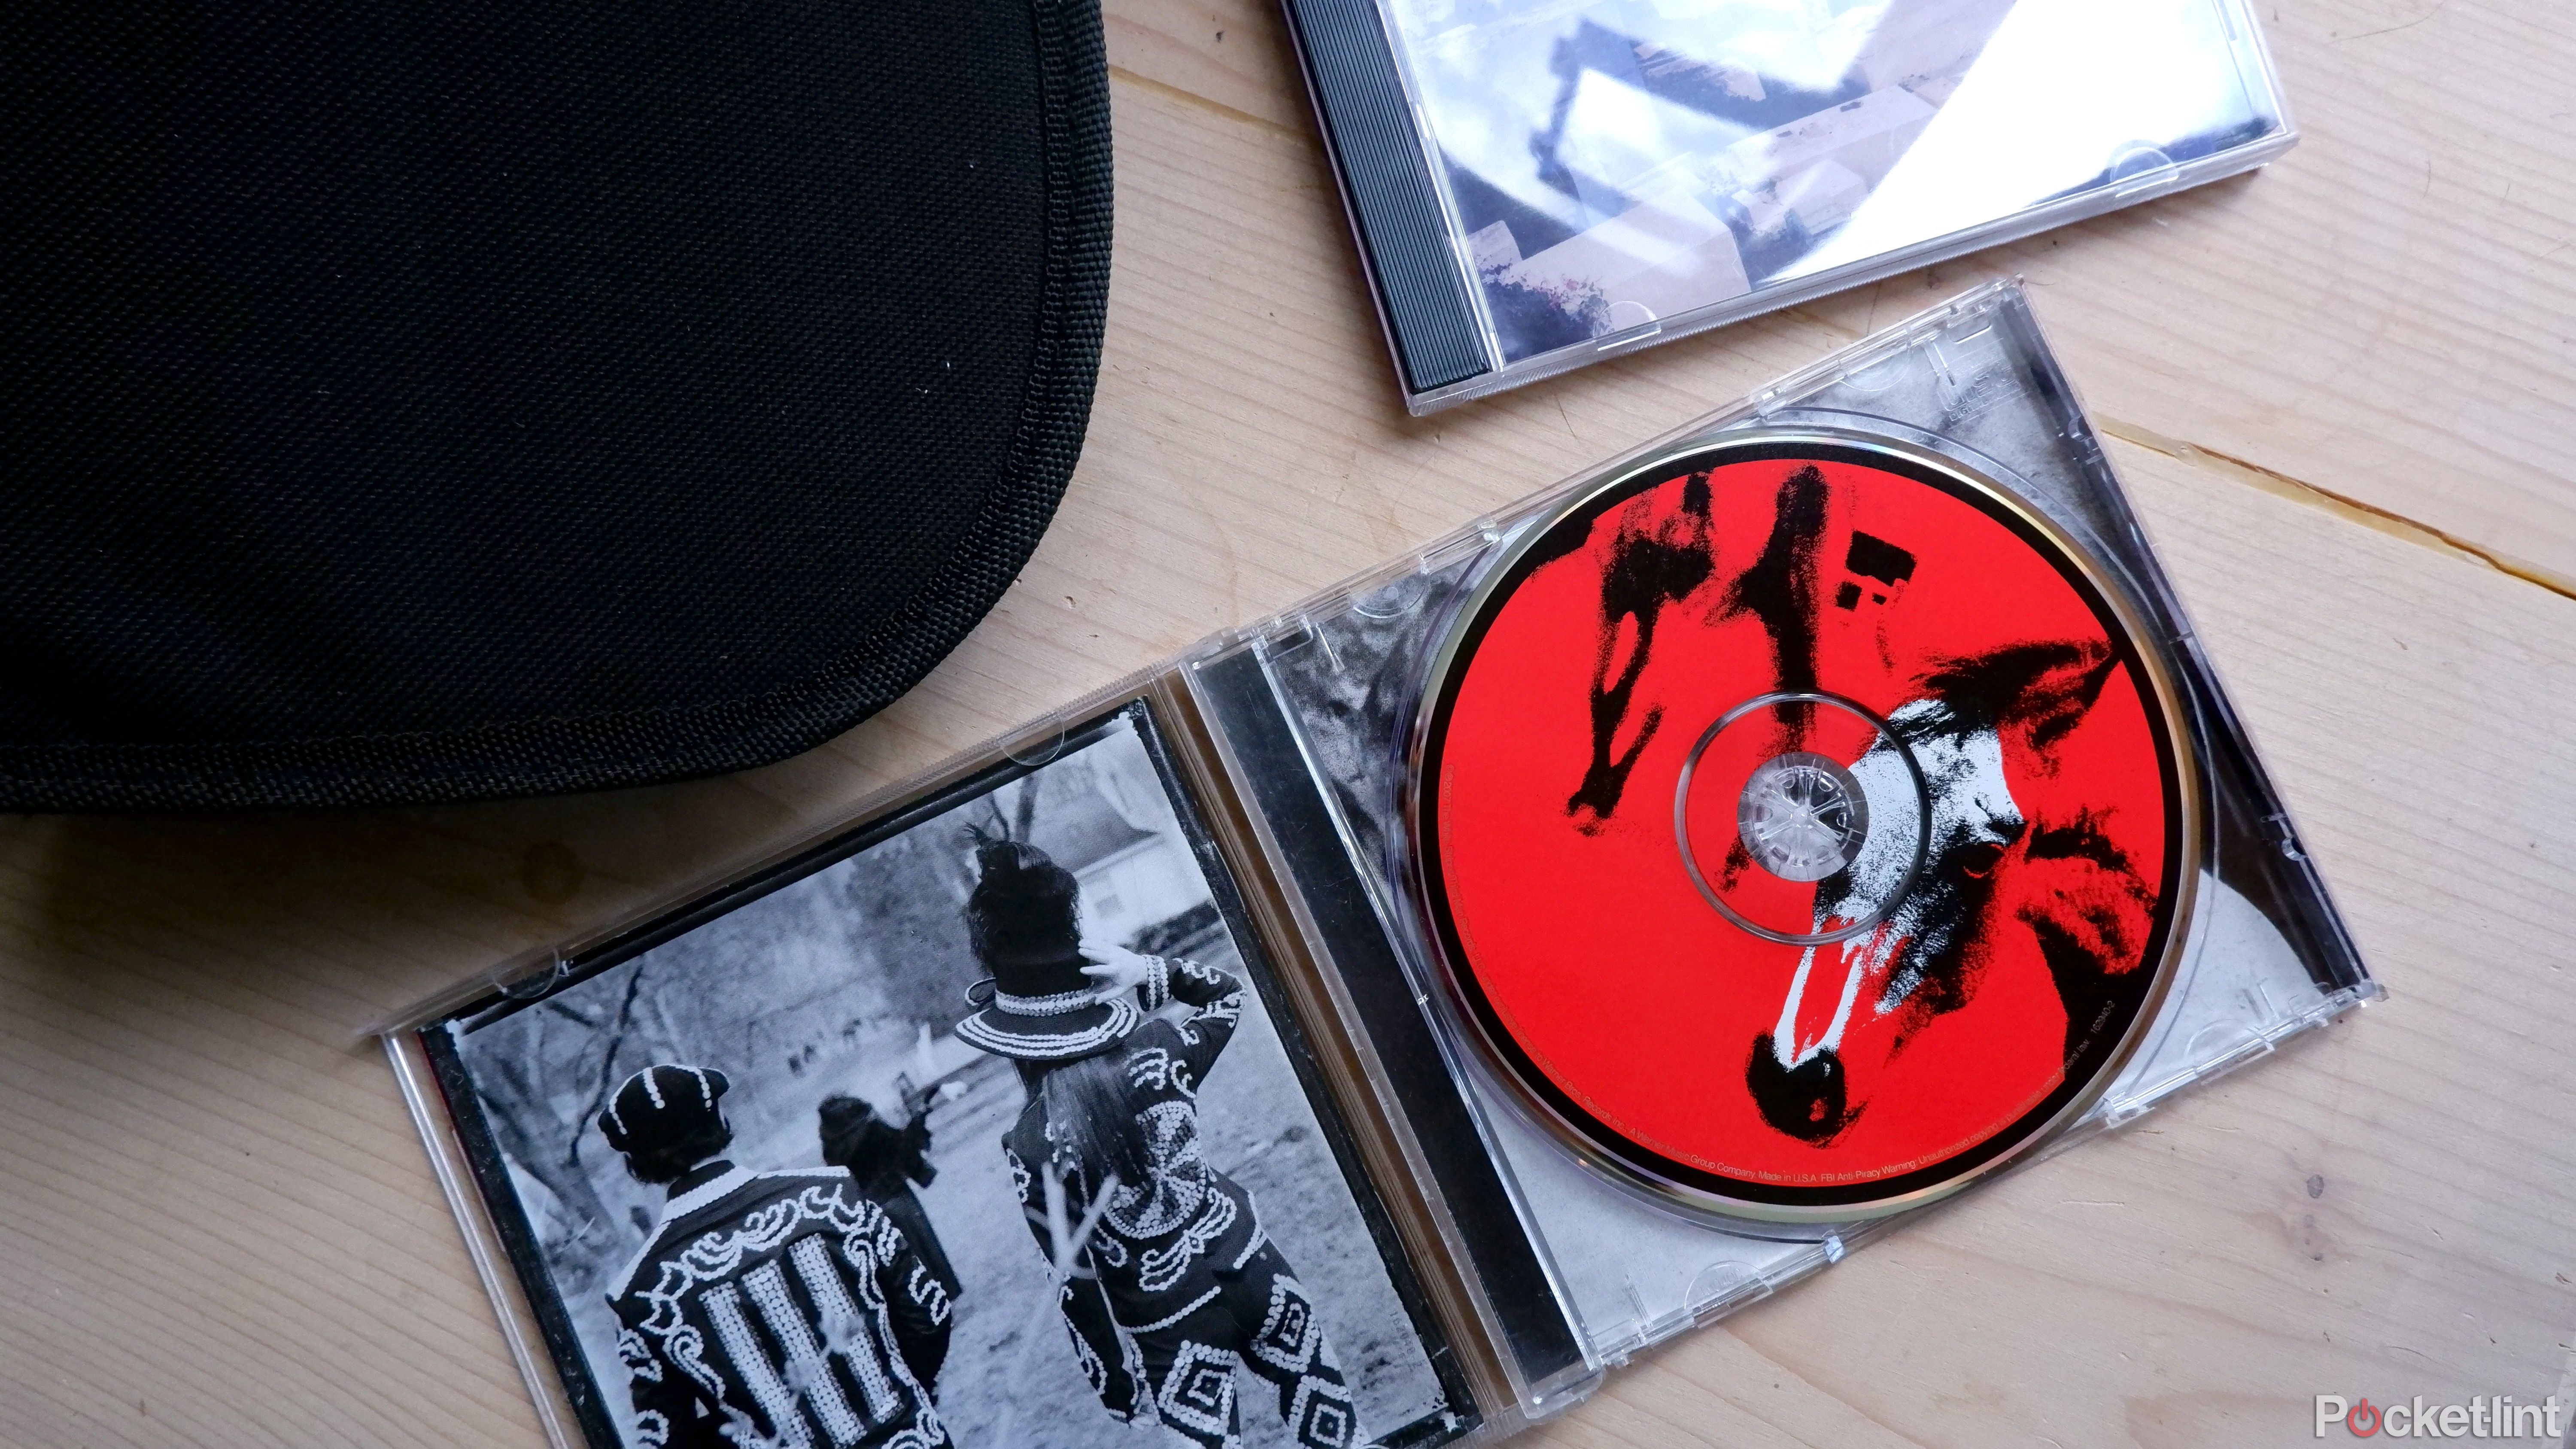 6 reasons to buy CDs over vinyl